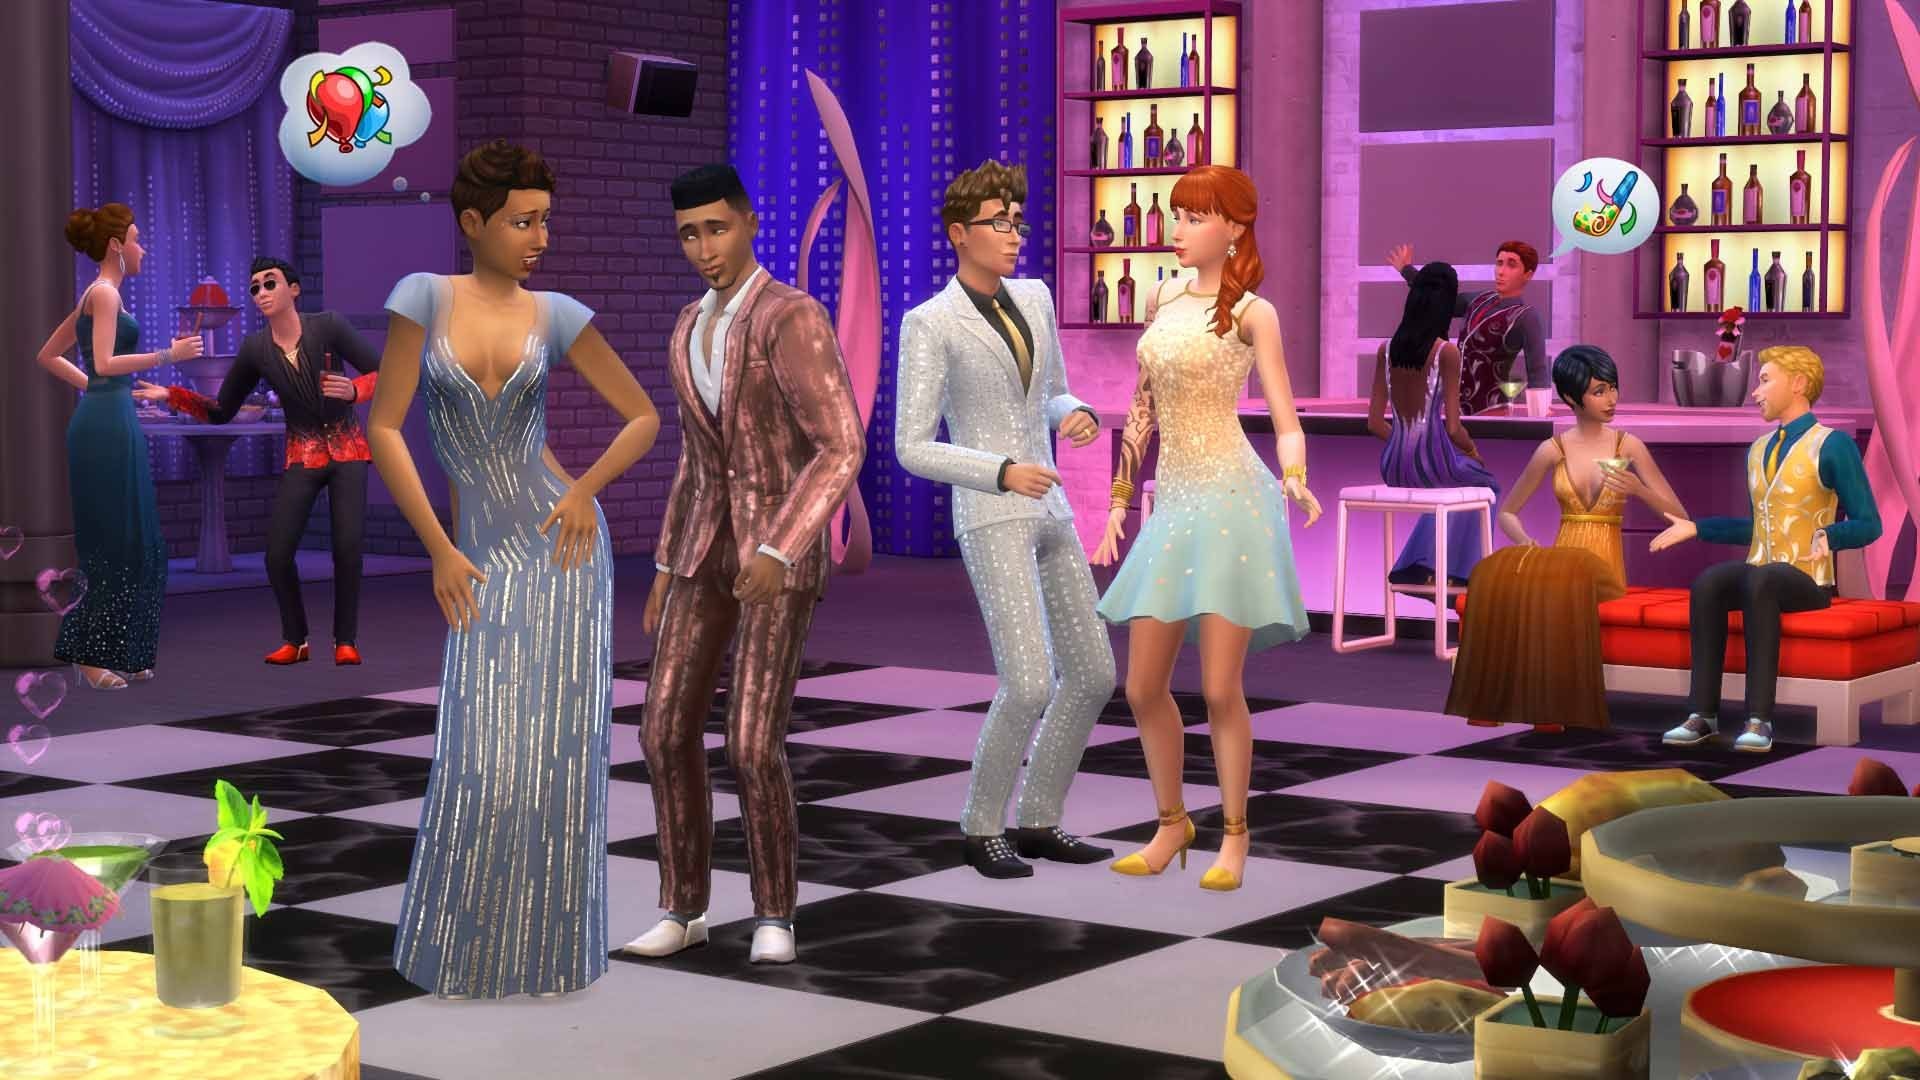 The Sims 4 Роскошная вечеринка Каталог Цифровая версия - фото